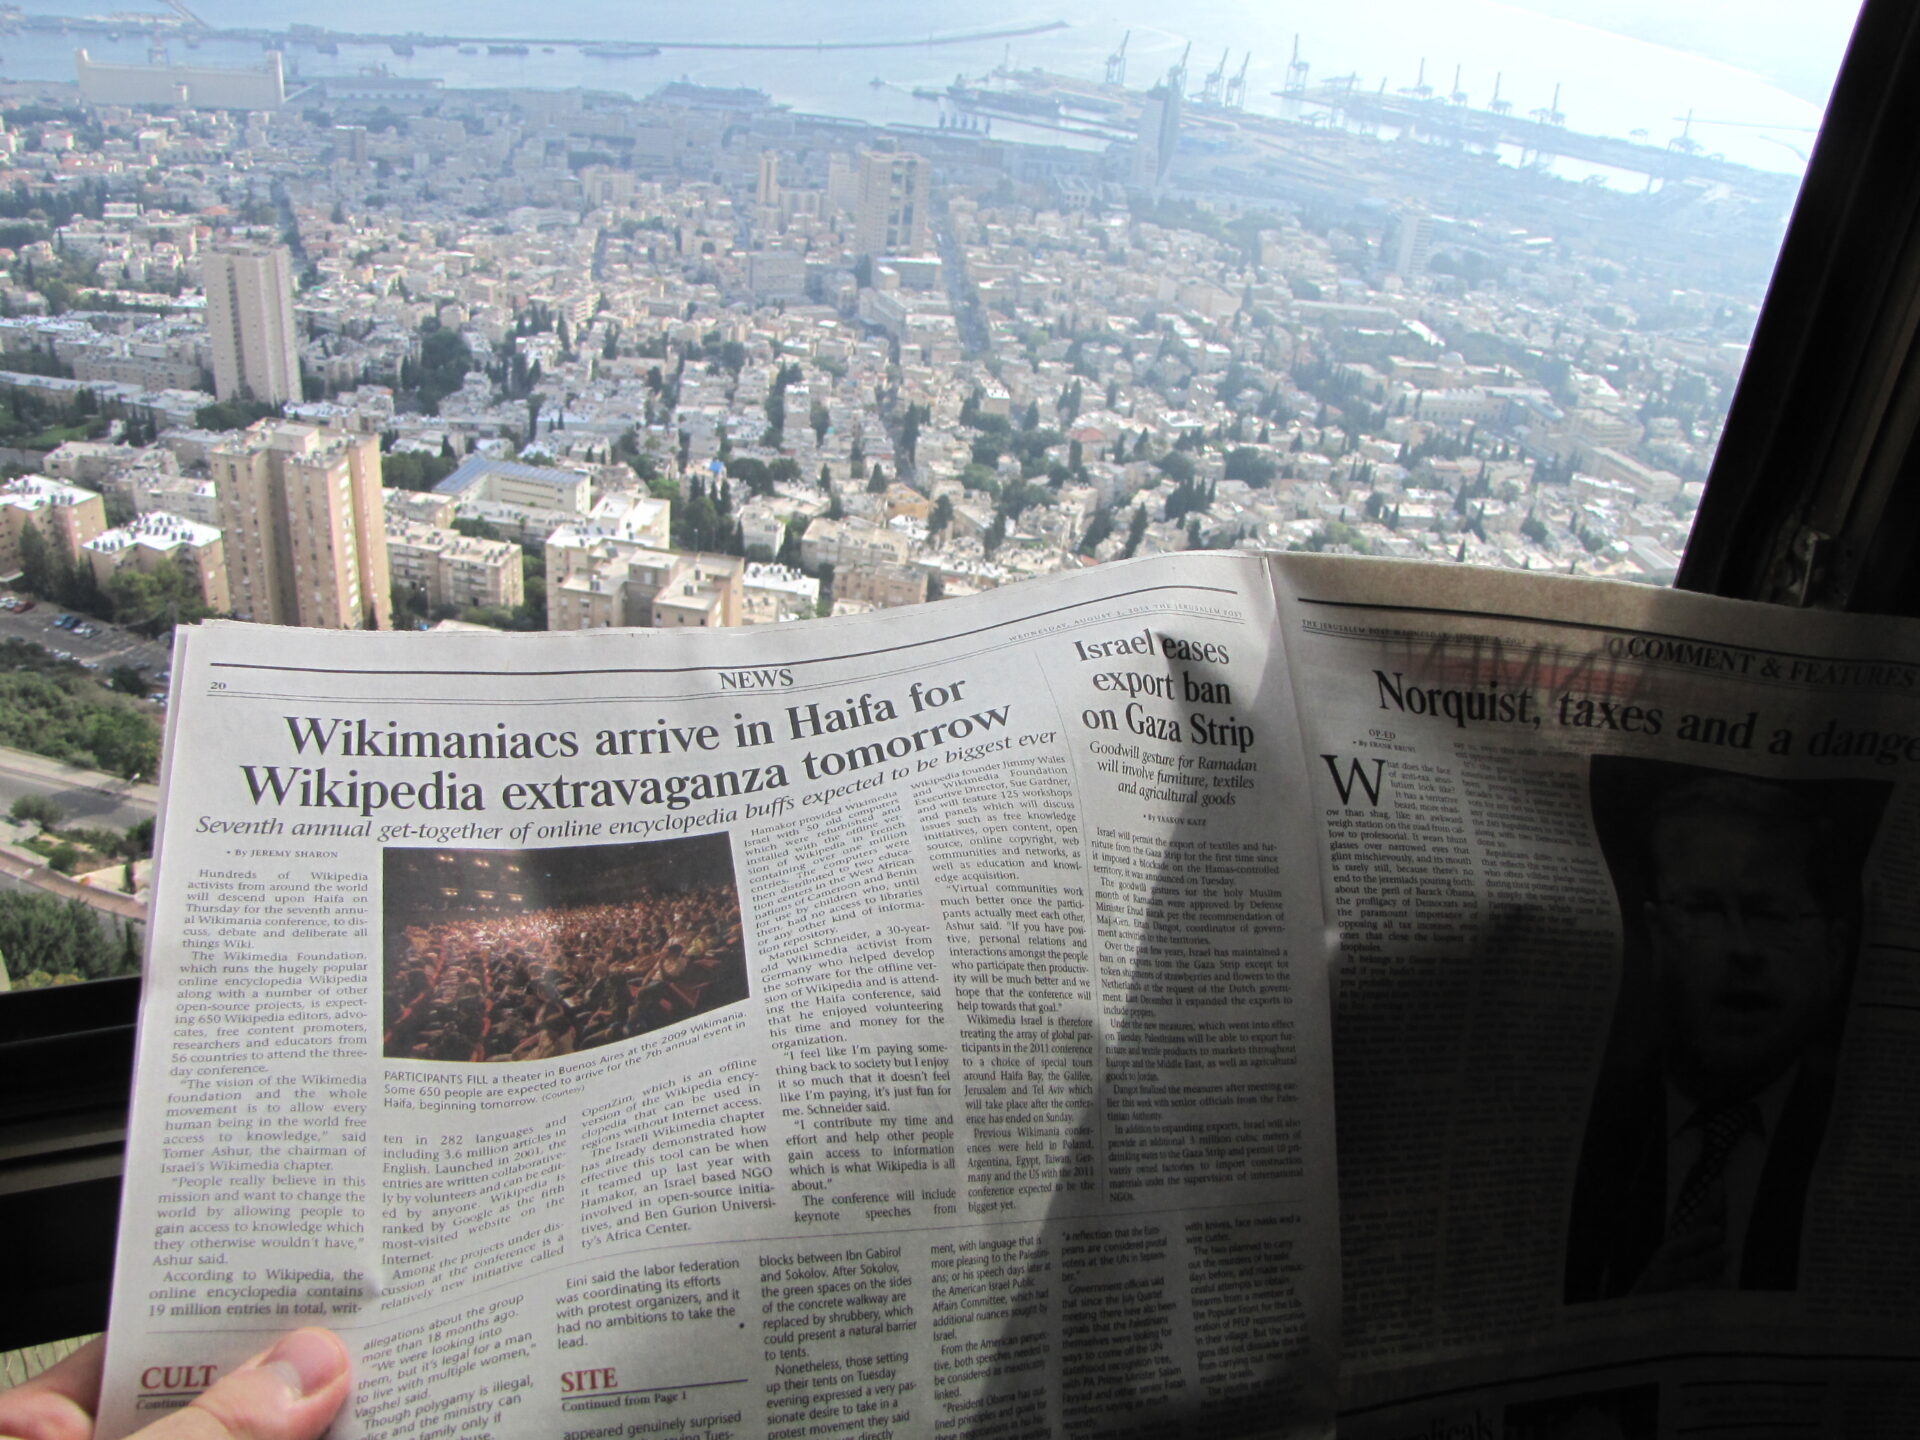 Wikimania 2011 in Haifa. The Jerusalem Post combined with a view of Haifa (Ziko van Dijk)